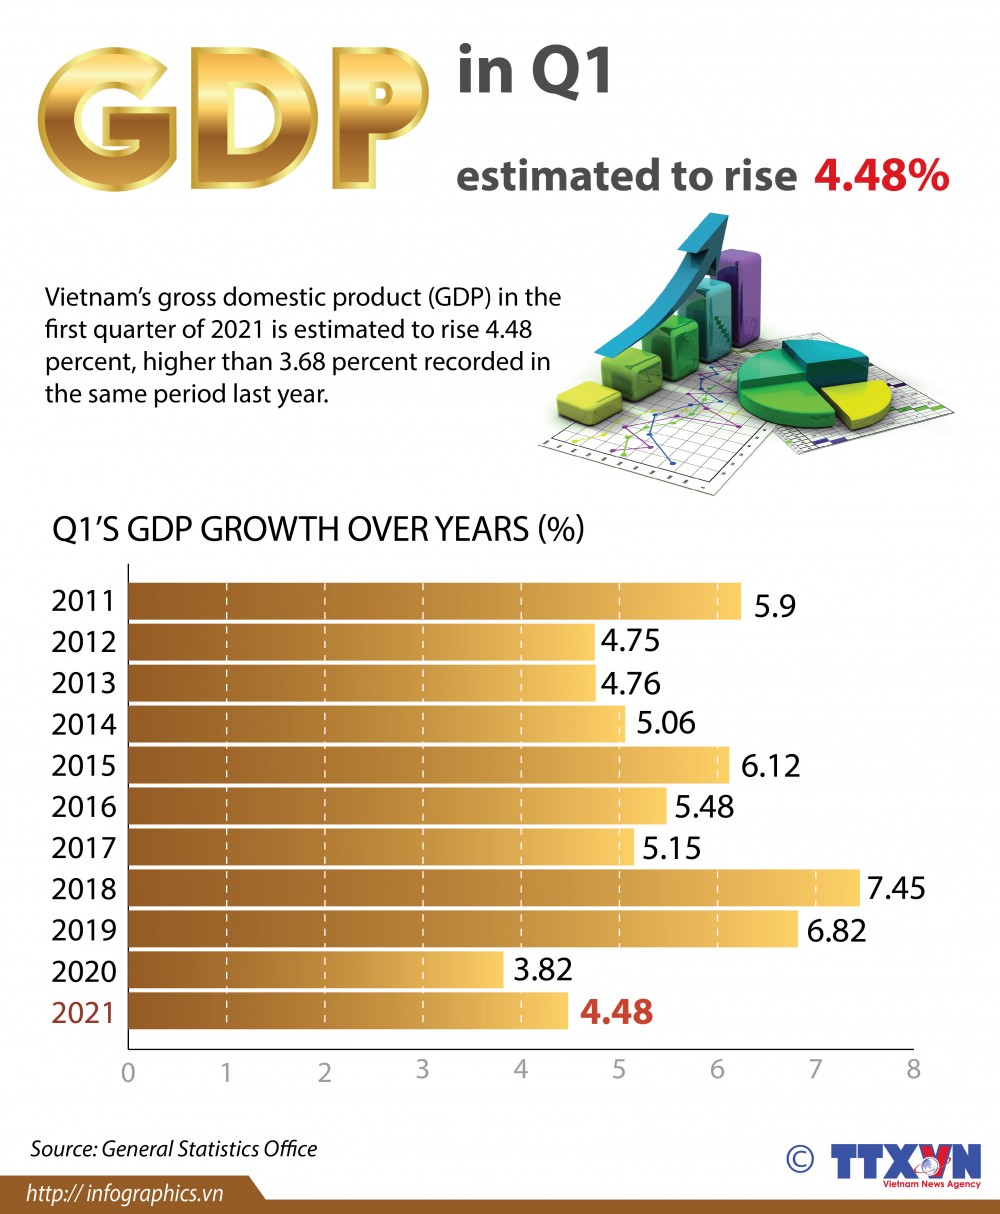 Viet Nam’s GDP estimated to rise 4.48 percent in Q1